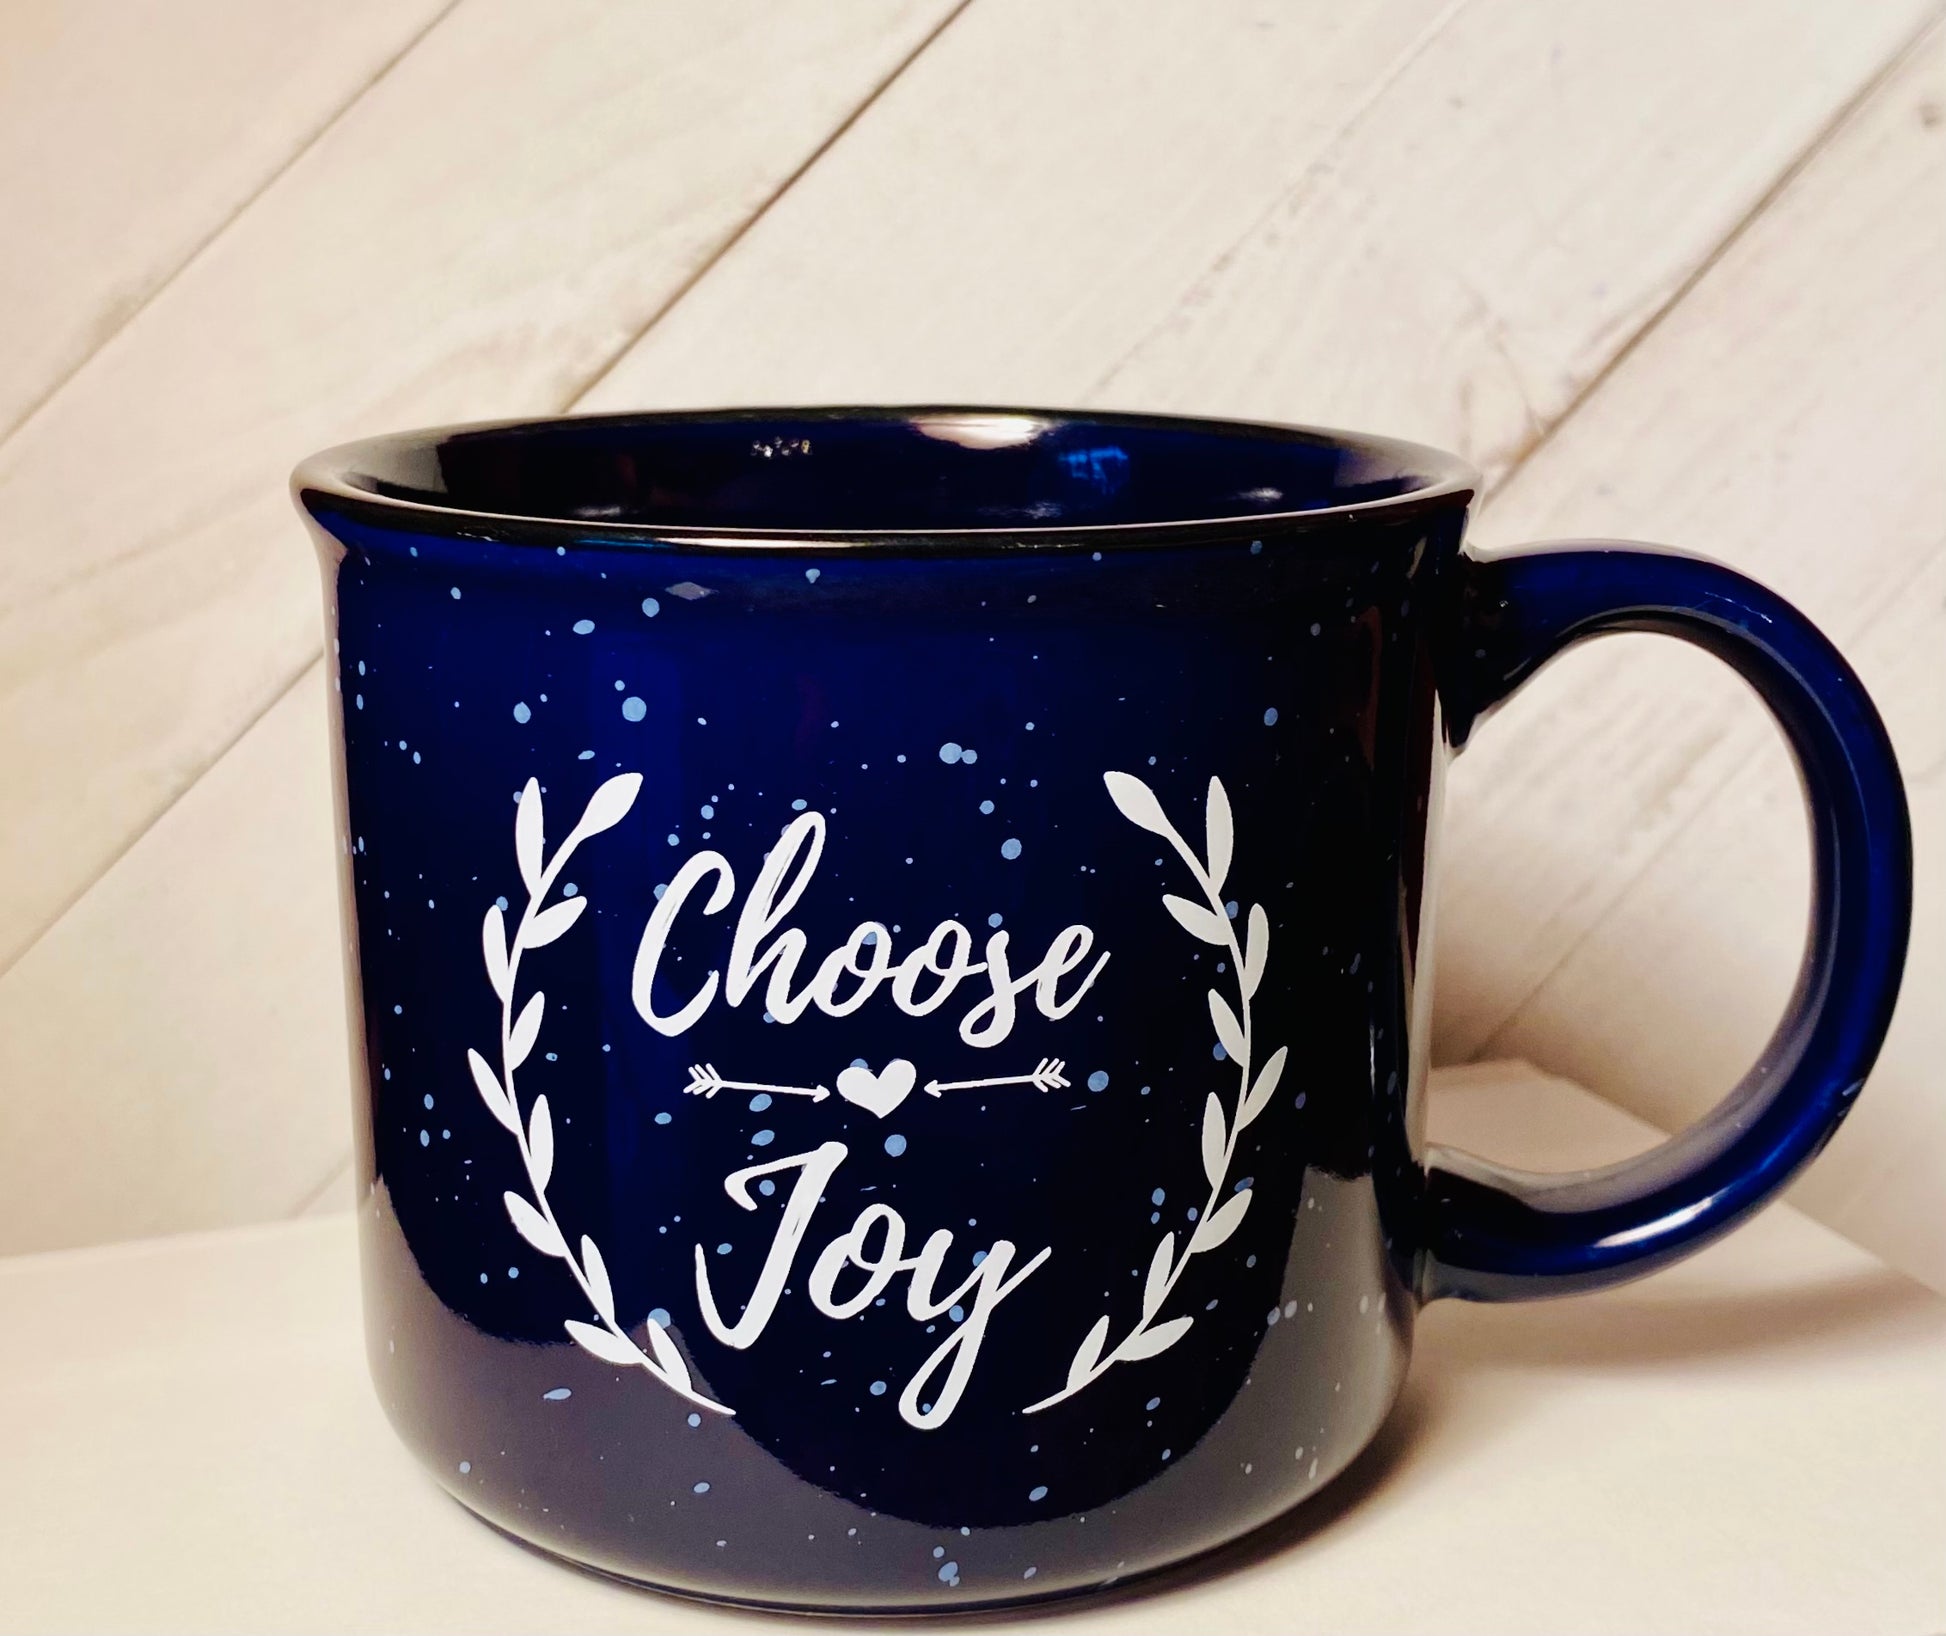 Peace & Joy - Campfire Mug